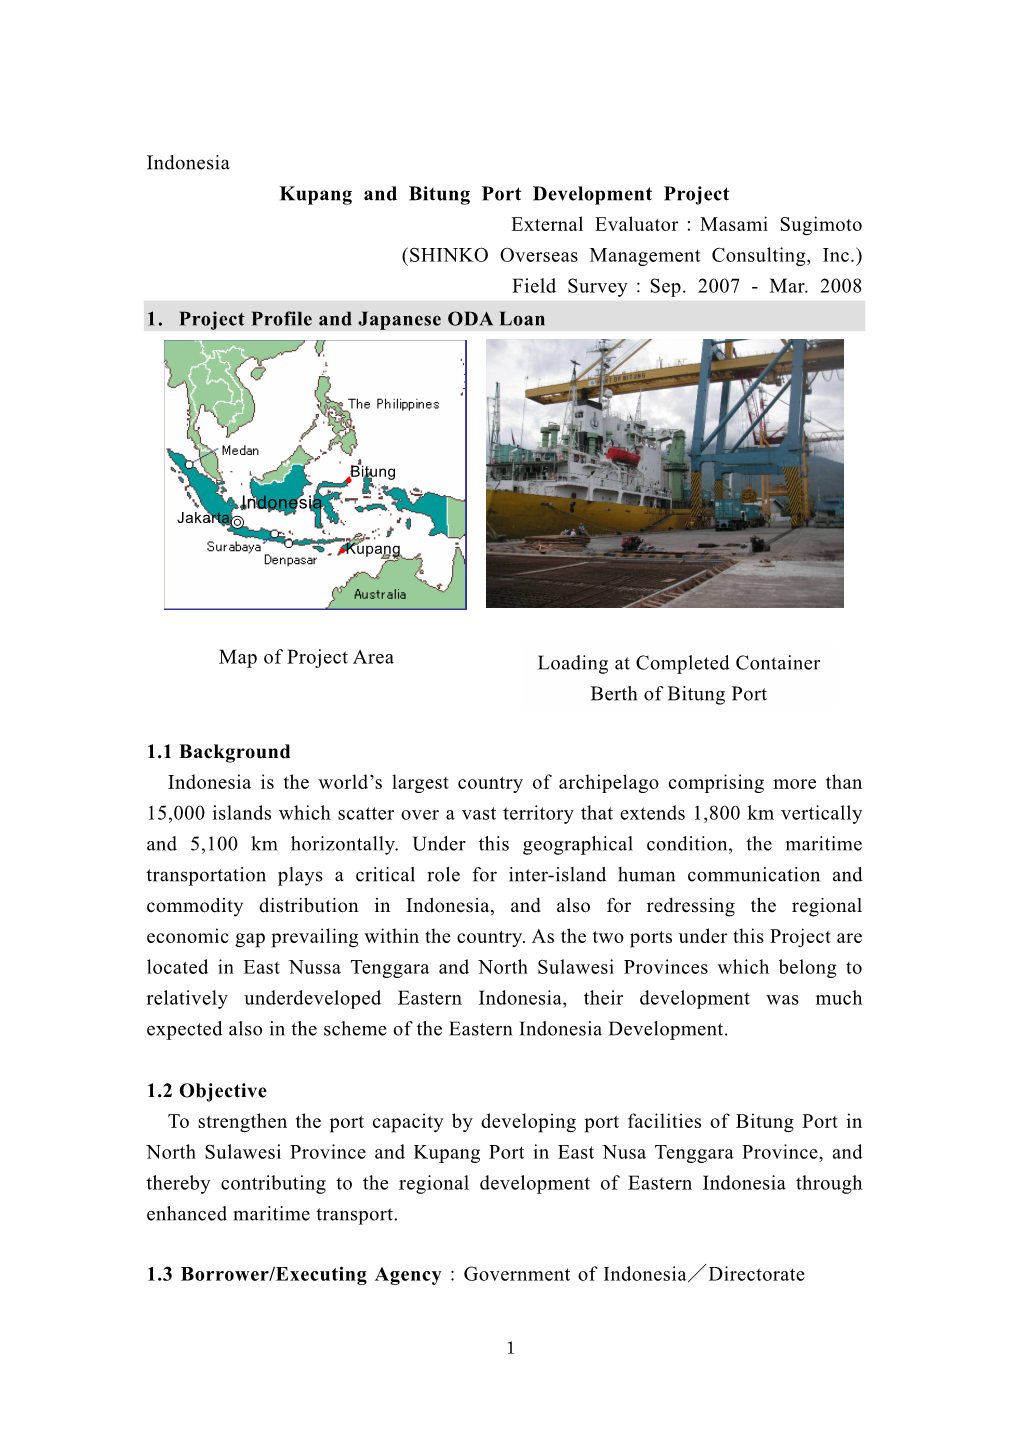 Indonesia Kupang and Bitung Port Development Project External Evaluator：Masami Sugimoto (SHINKO Overseas Management Consulting, Inc.) Field Survey：Sep